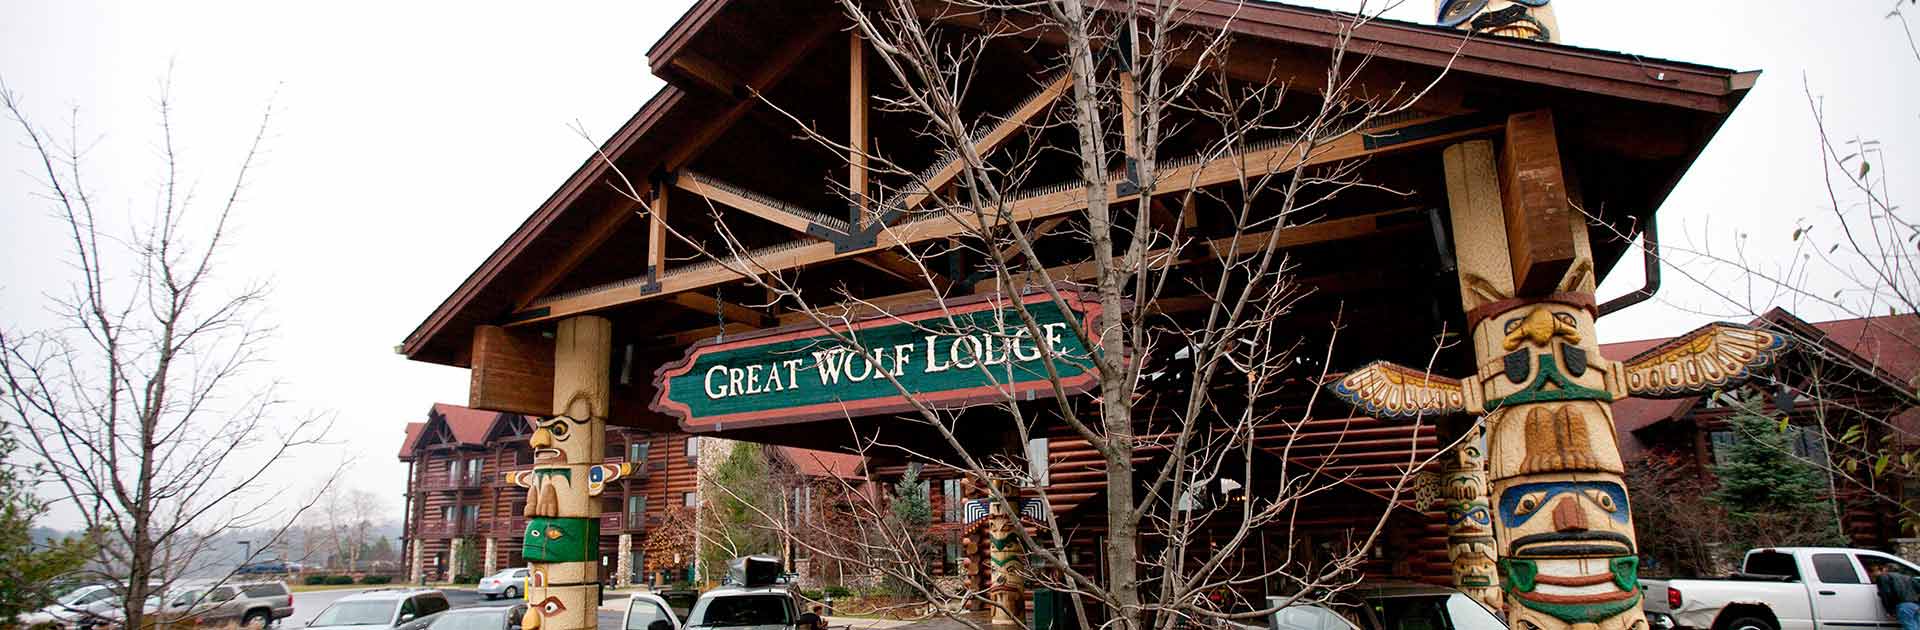 Great Wolf resort Traverse City